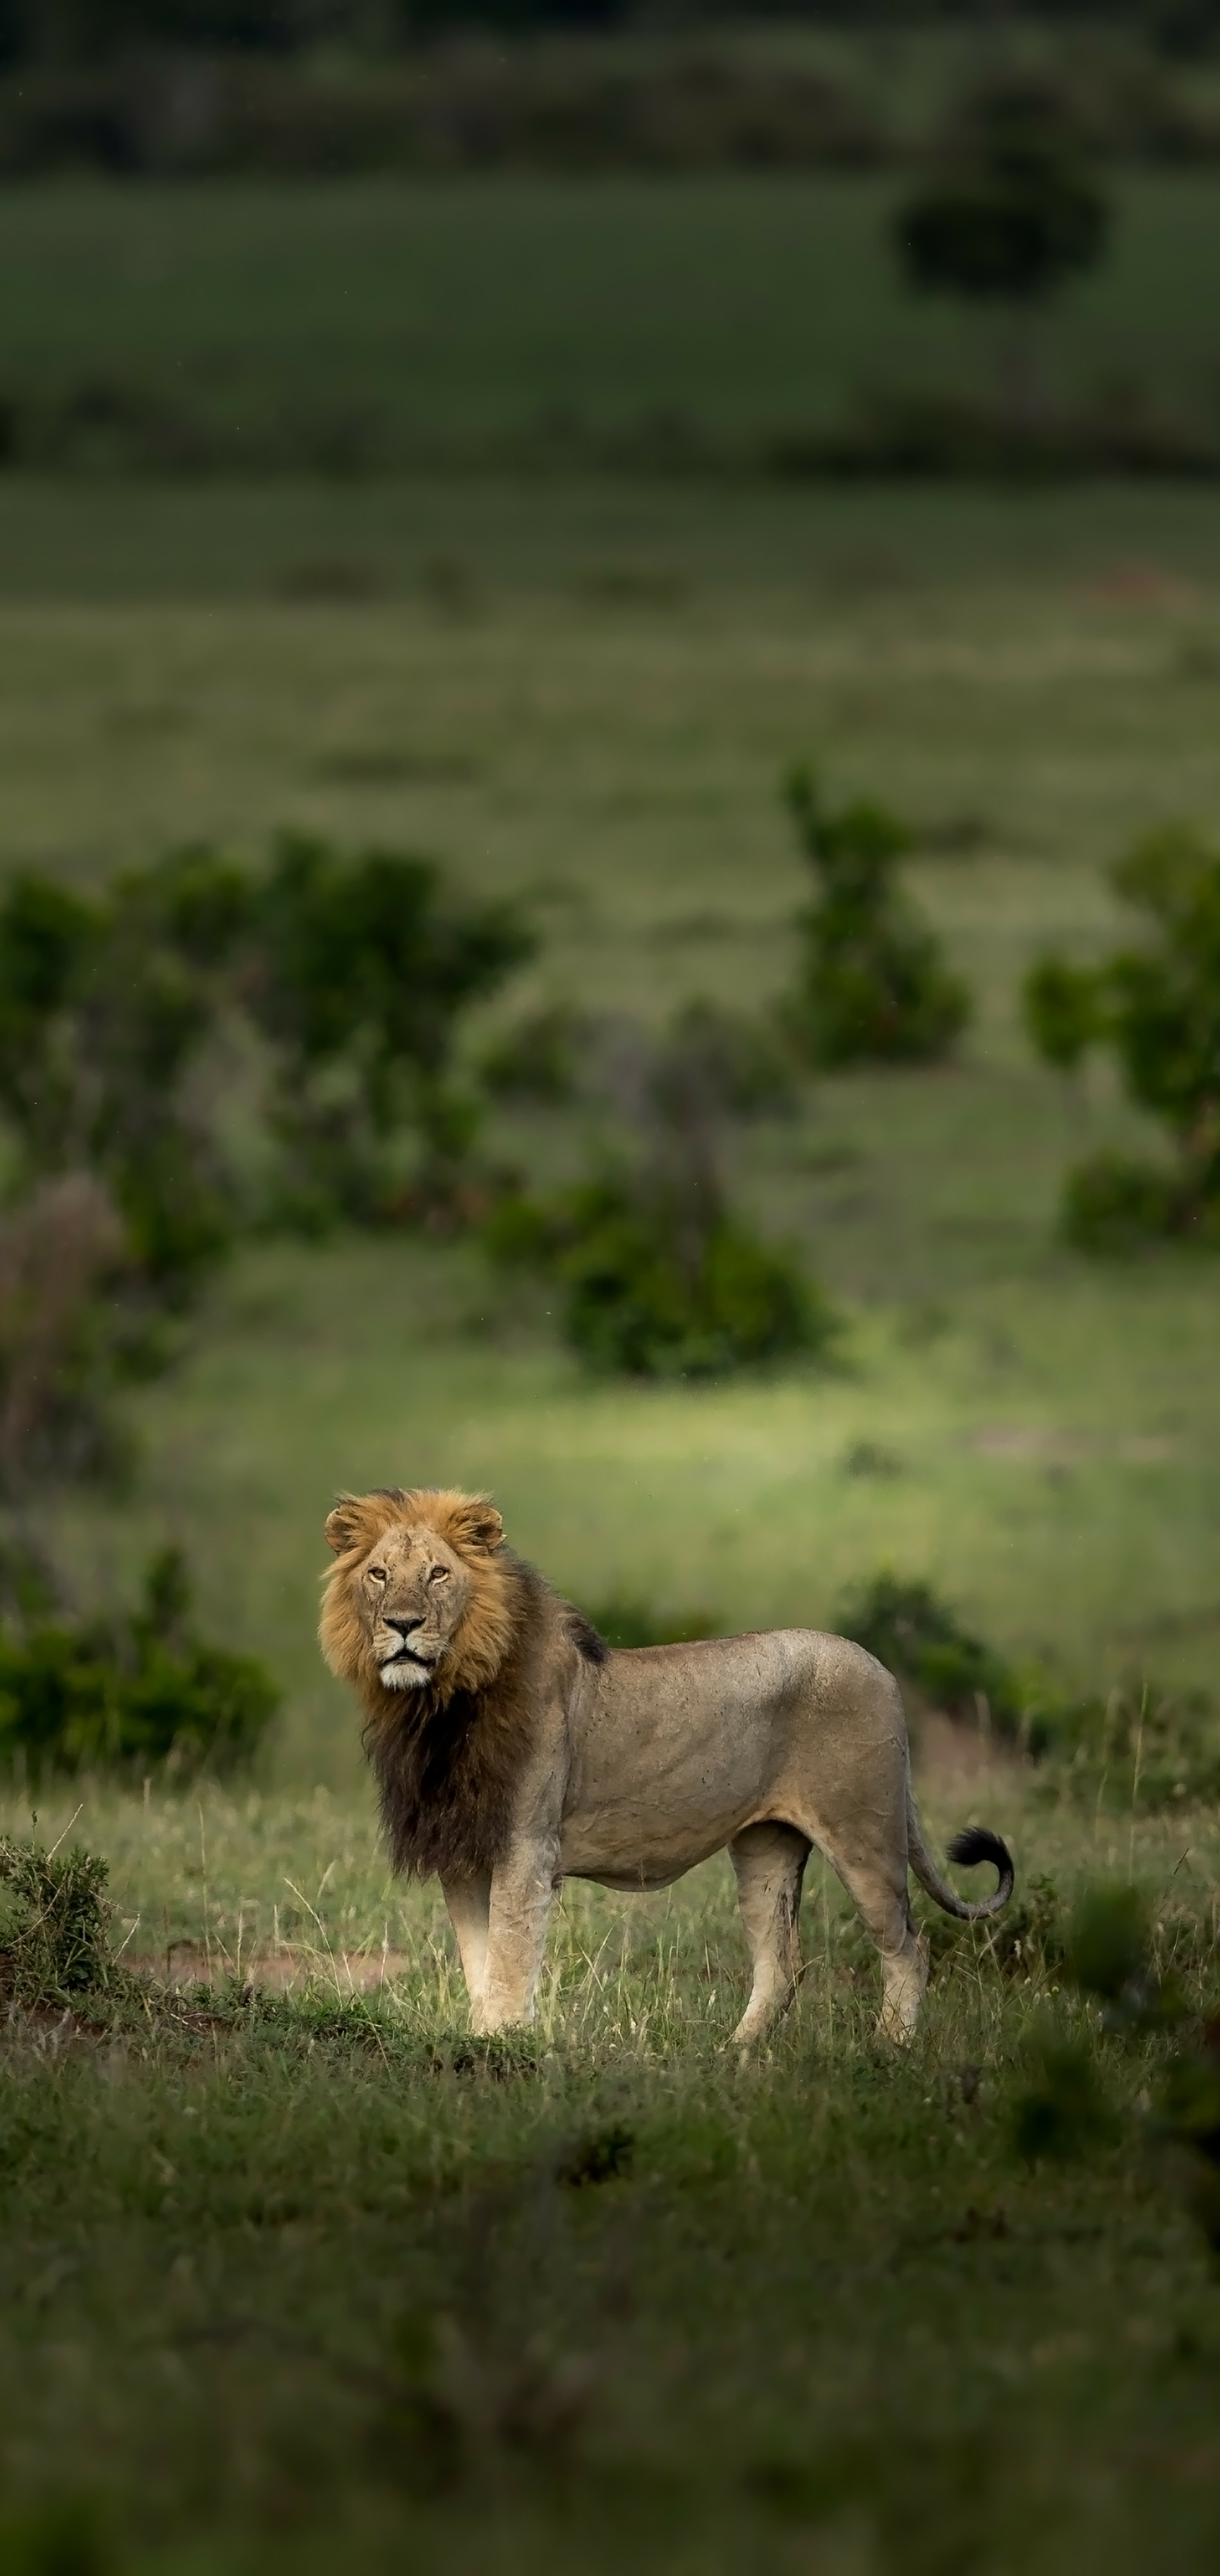  Serengeti HQ Background Images